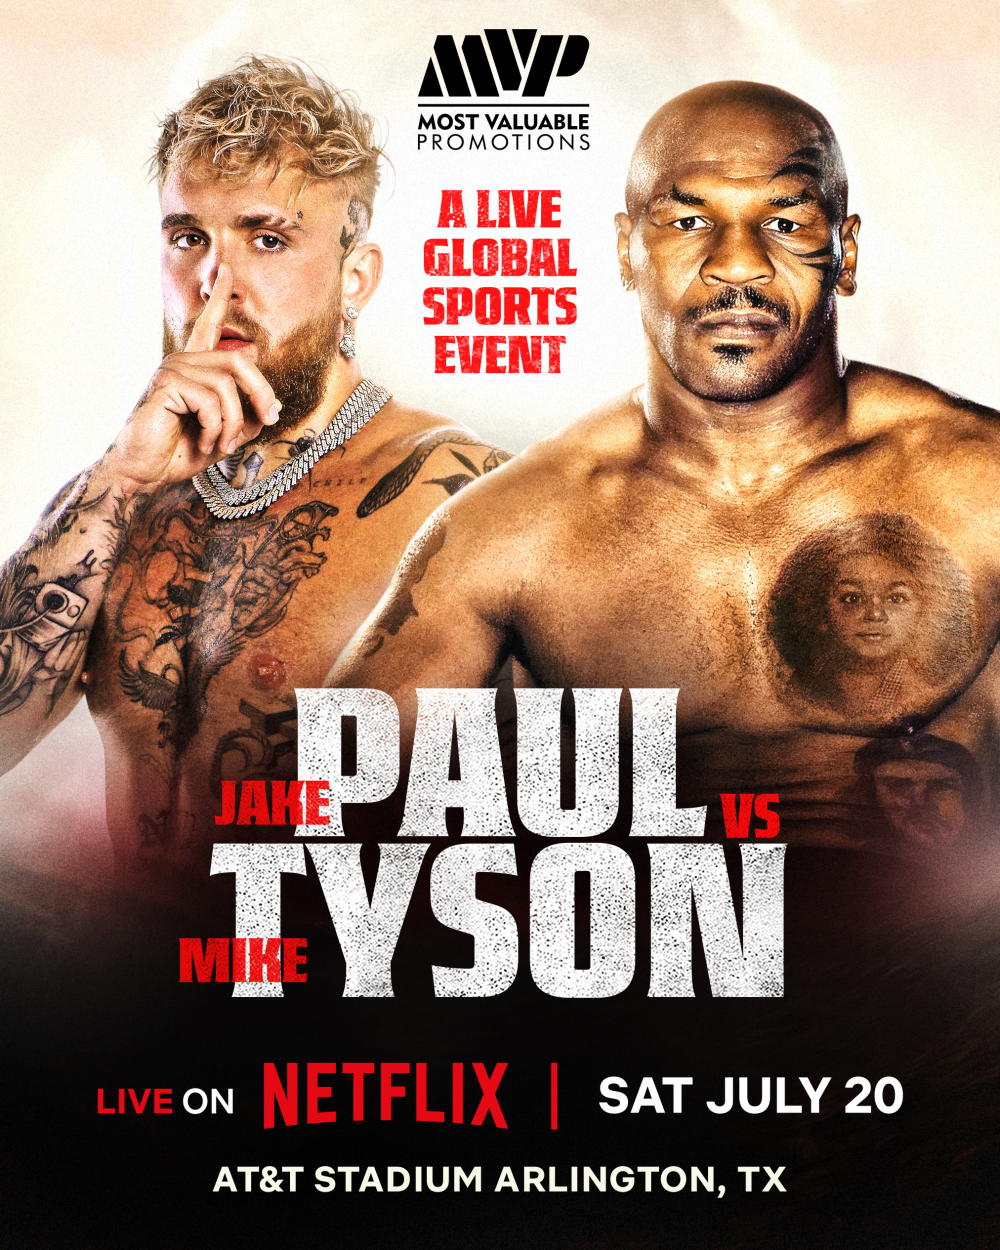 Jake Paul vs. Mike Tyson To Stream Via Netflix On July 20